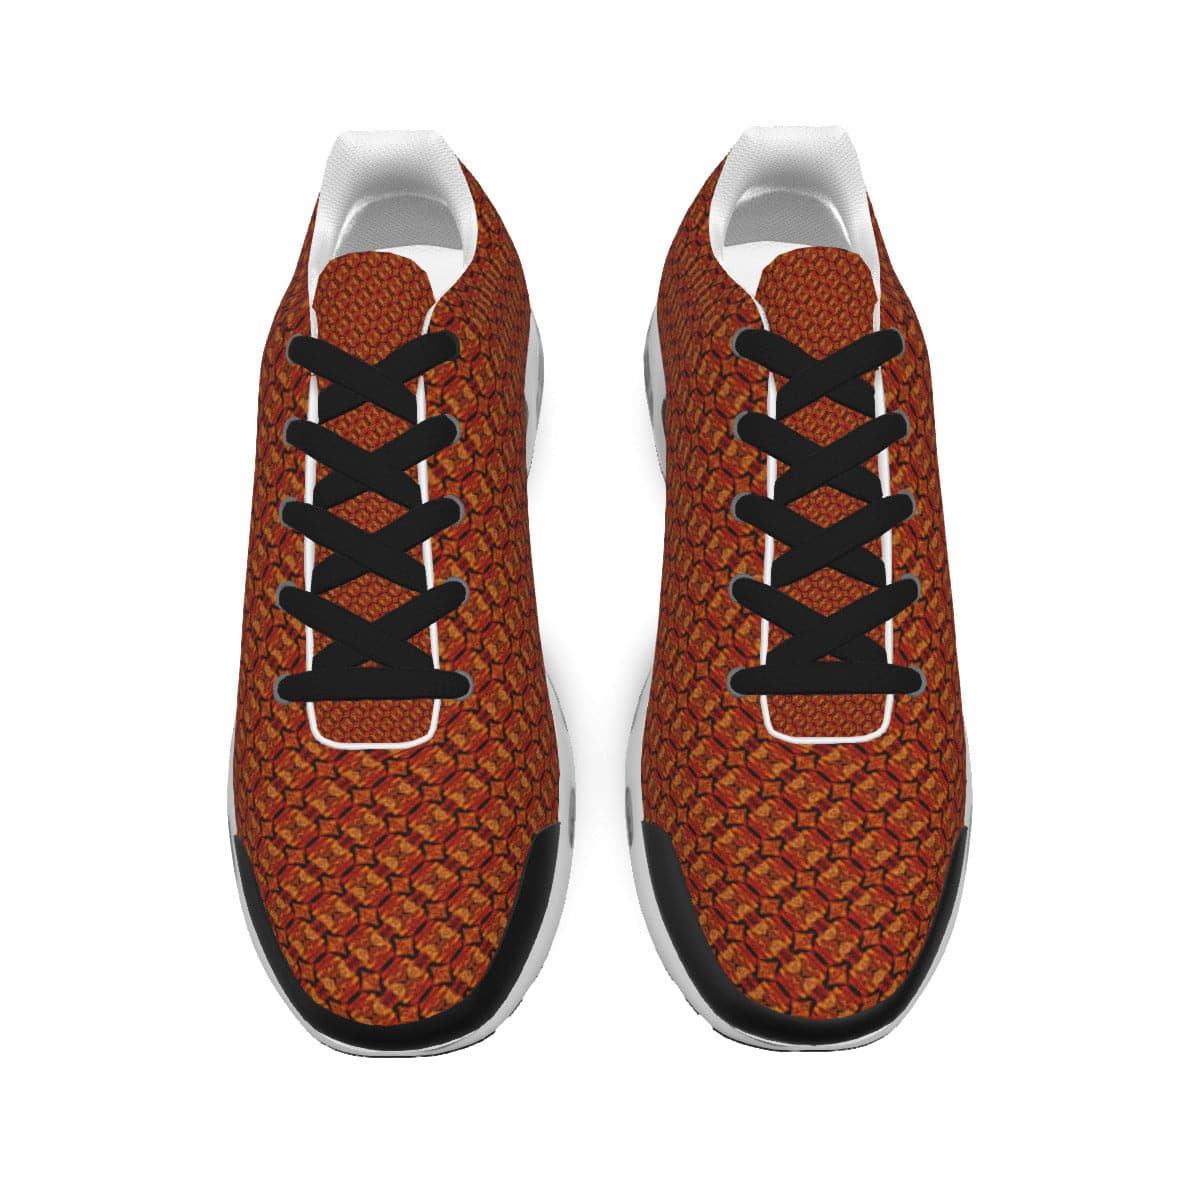 Orange Snake Design, Stylish Men's Air Cushion Sports Shoes, by Sensus Studio Design